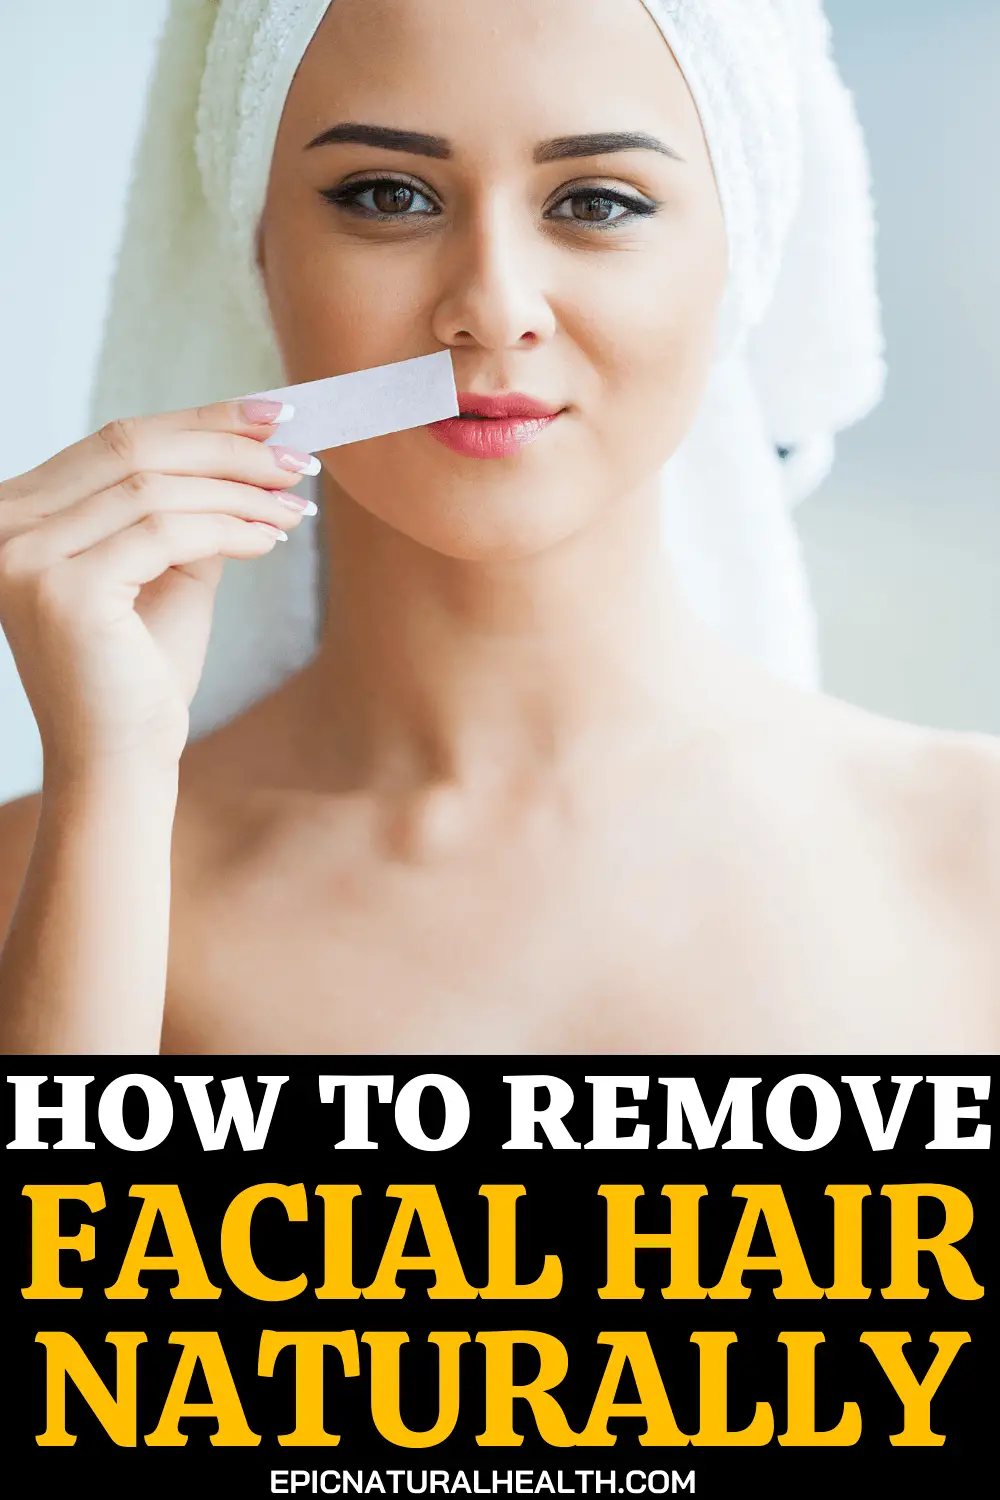 How to Remove Facial Hair Naturally